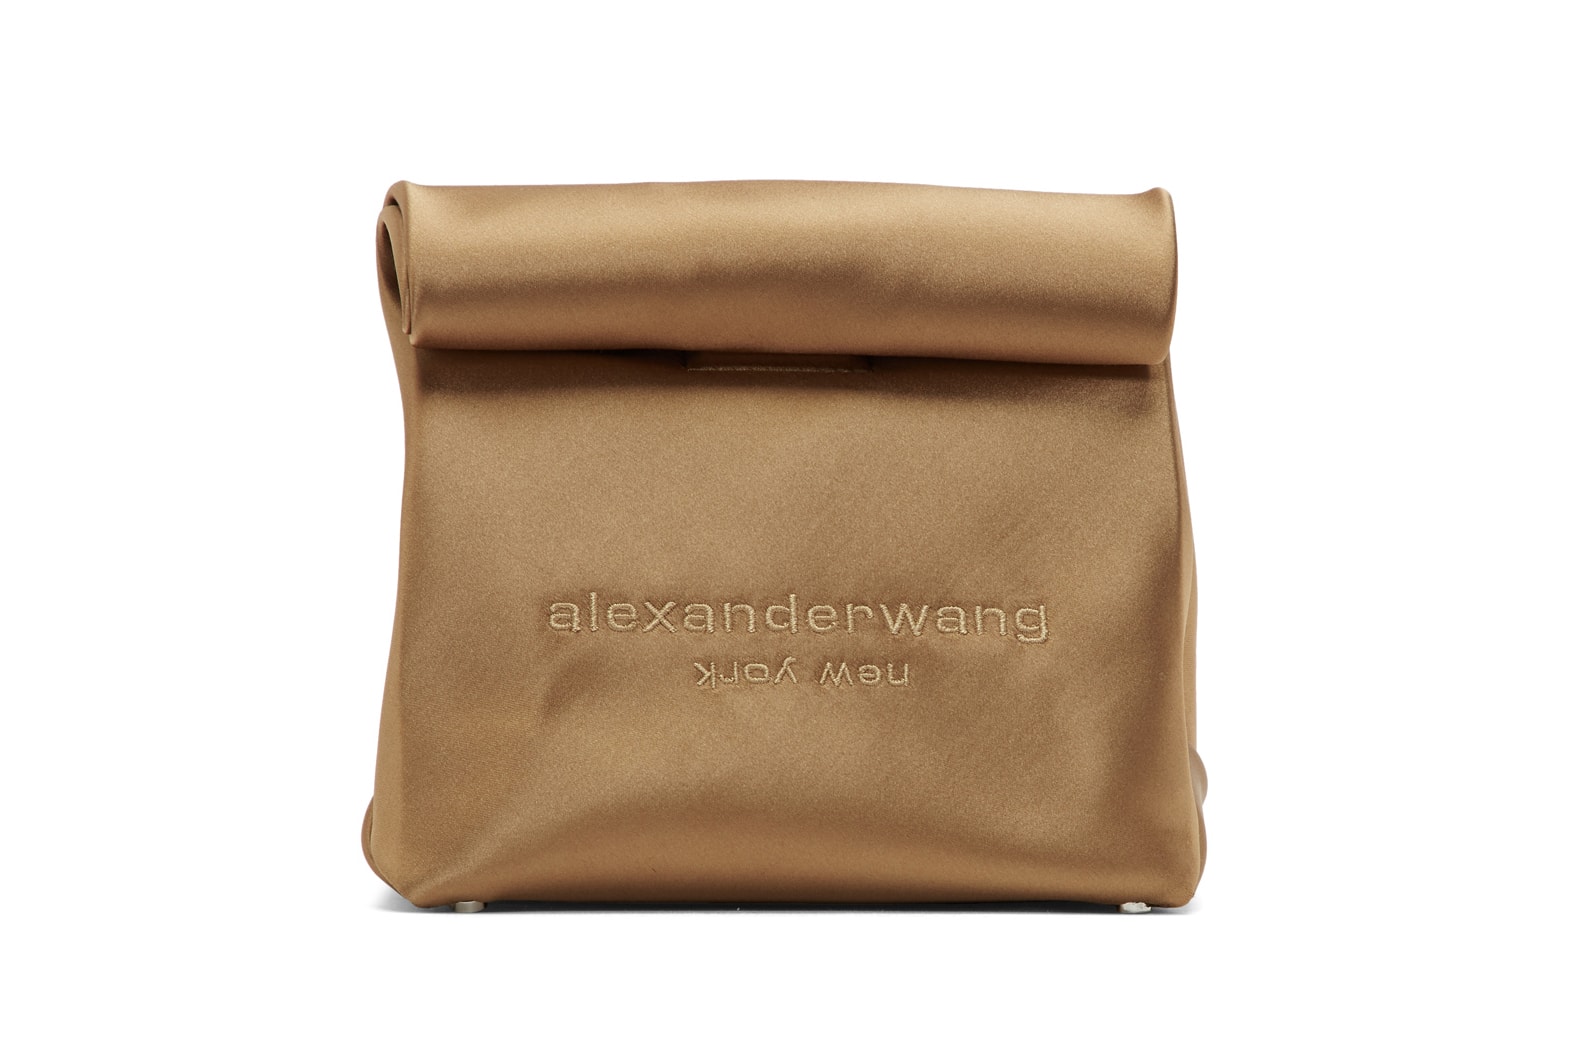 Alexander Wang Lunch Box Bag Clutch Accessory Pink Green Brown Beige 